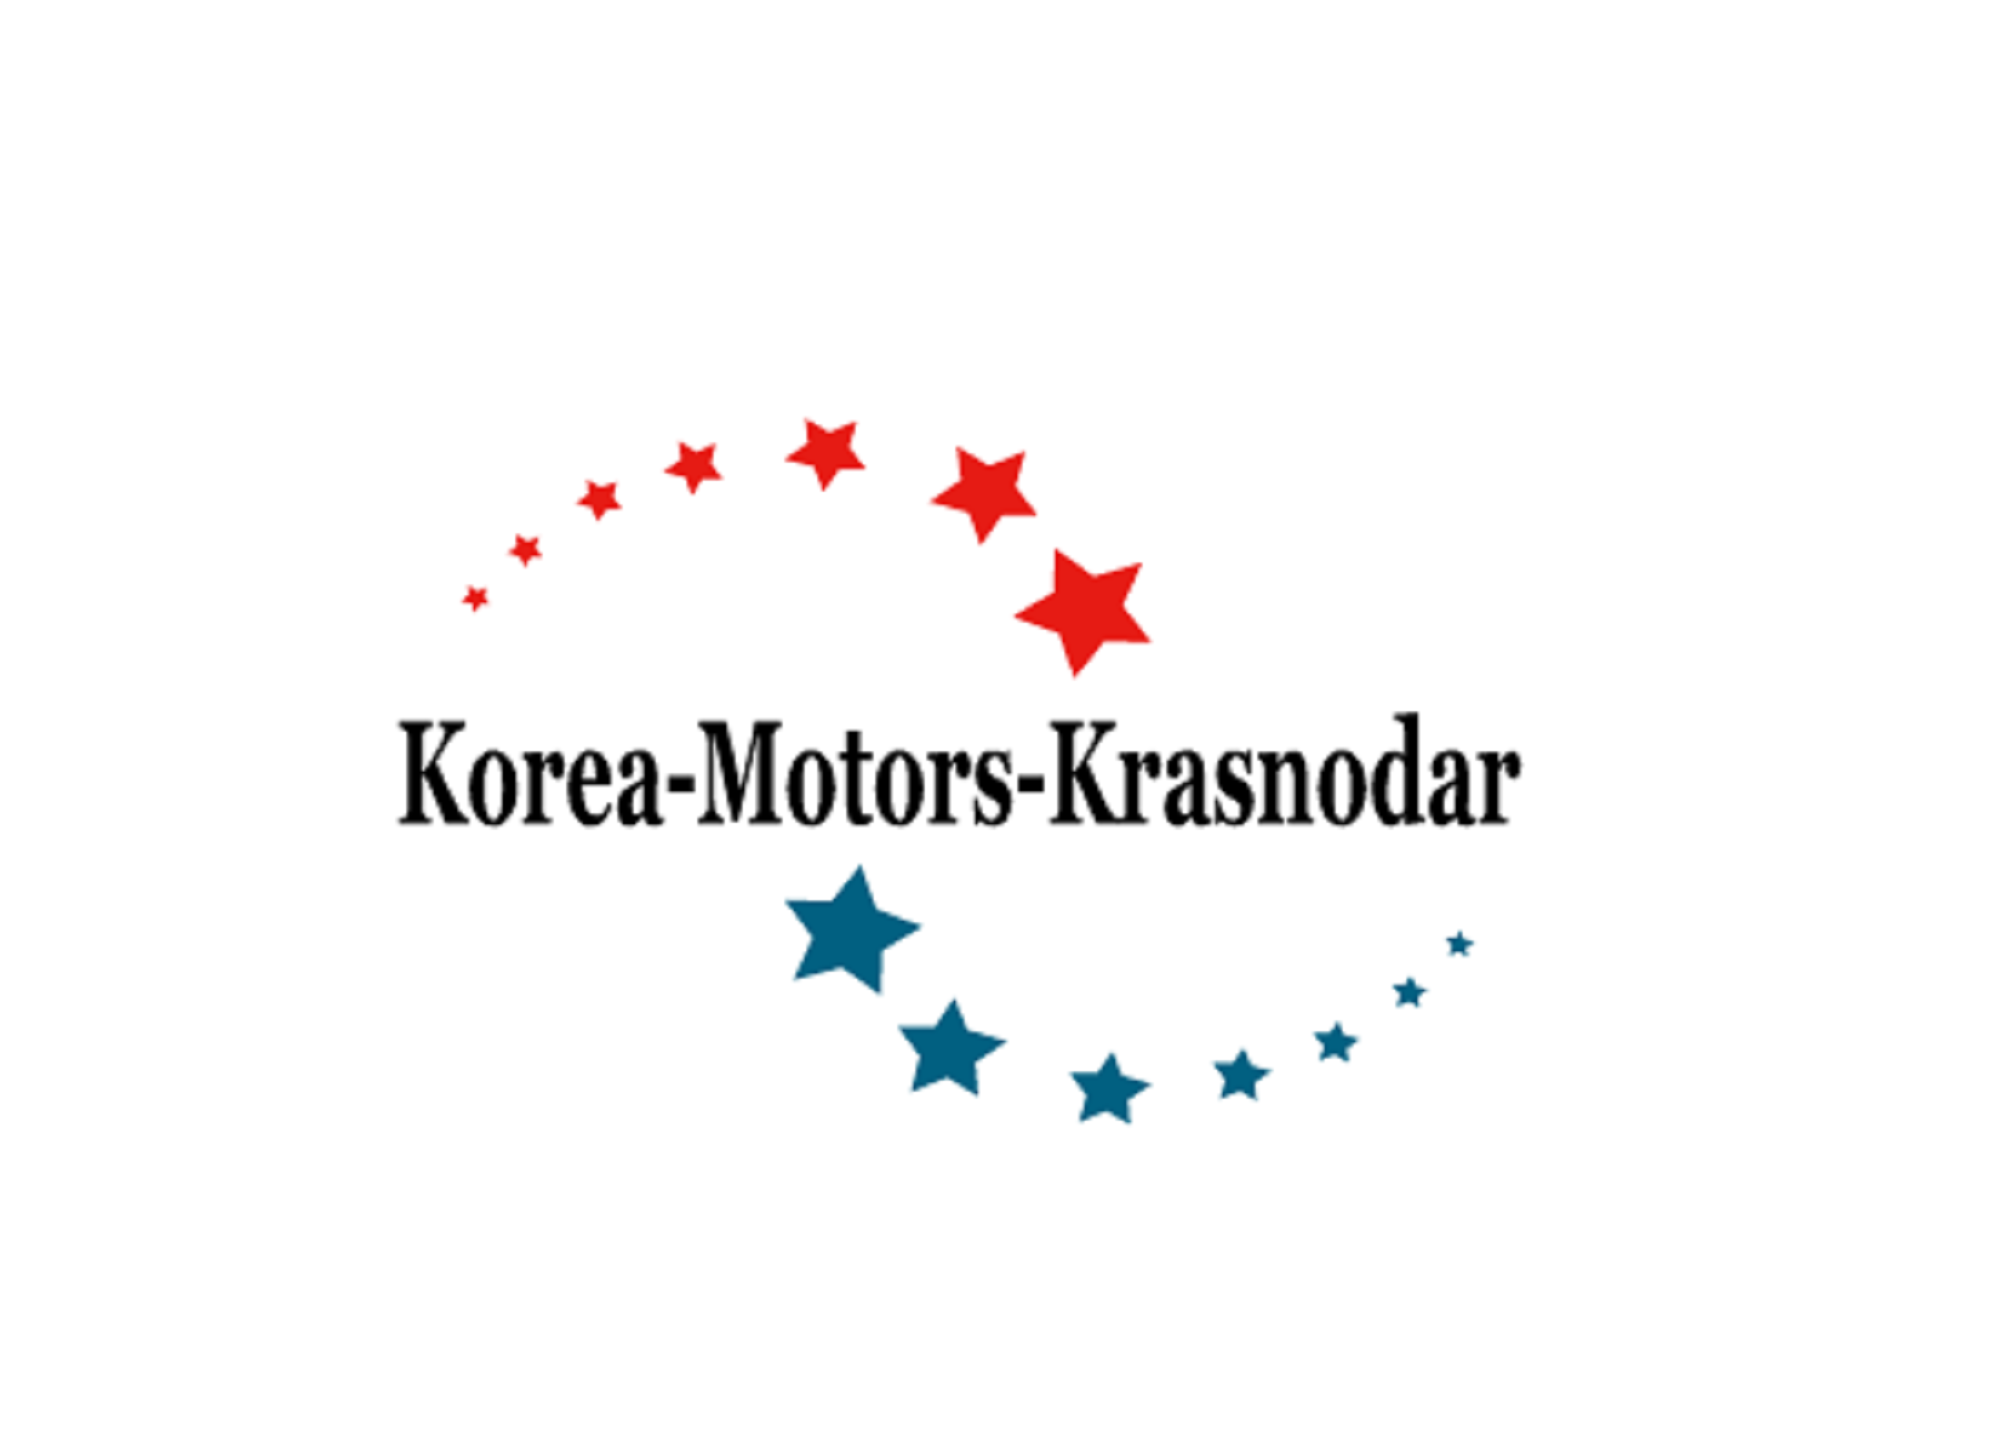 Автозапчасти для корейских автомобилей-Accent, Solaris, Grand Starex, Sportage, Santa Fe, Rio